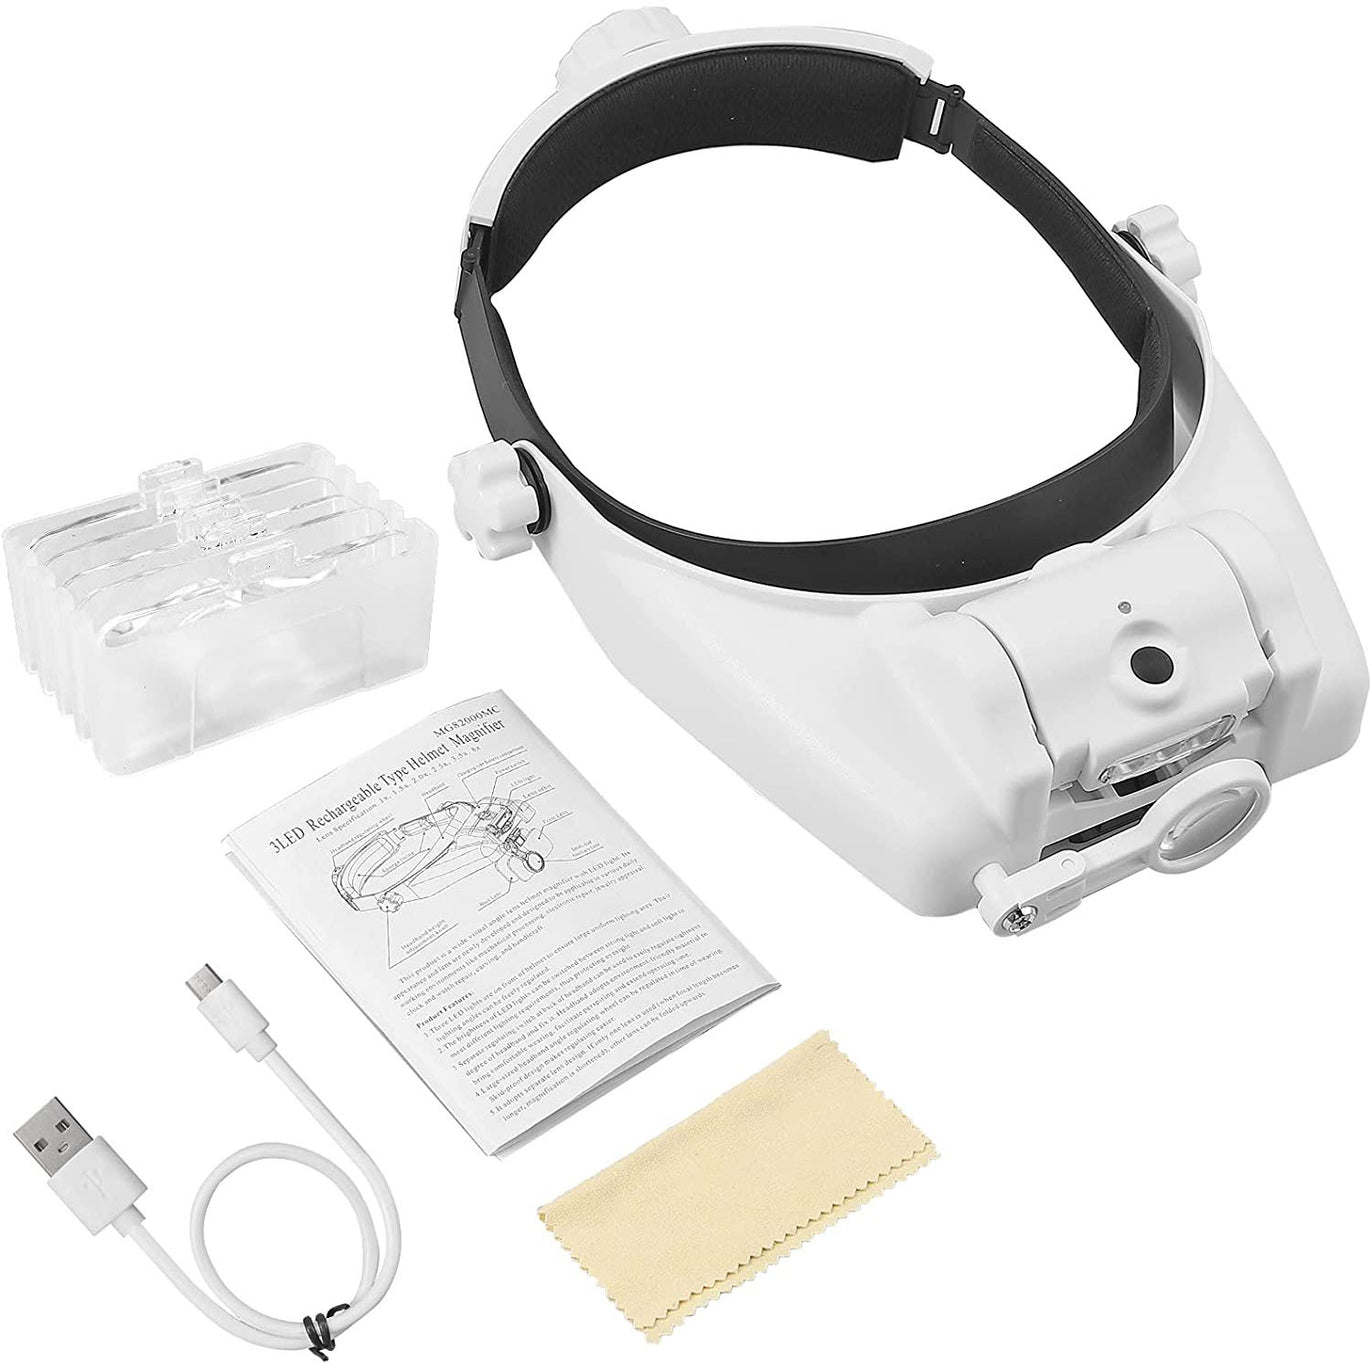 eSynic Head Magnifier Rechargeable 1X to 3.5X 5 Detachable Lenses Head Magnifier